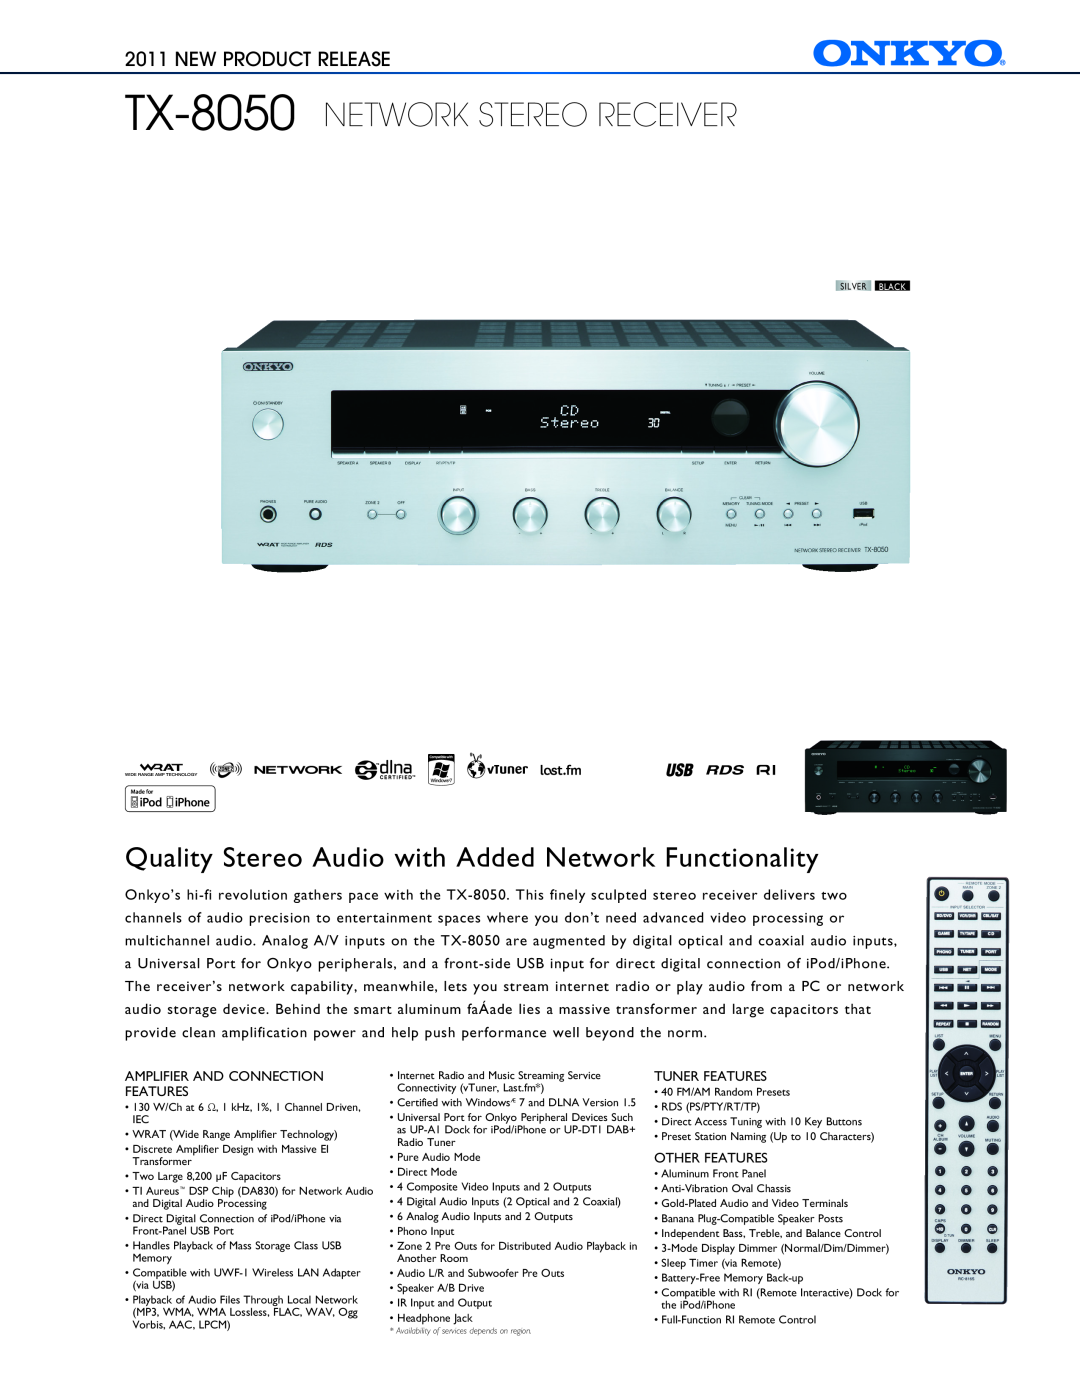 Onkyo TX-8050 instruction manual Enjoying Audio Sources...... En-18, Appendix, Contents, Network Stereo Receiver 